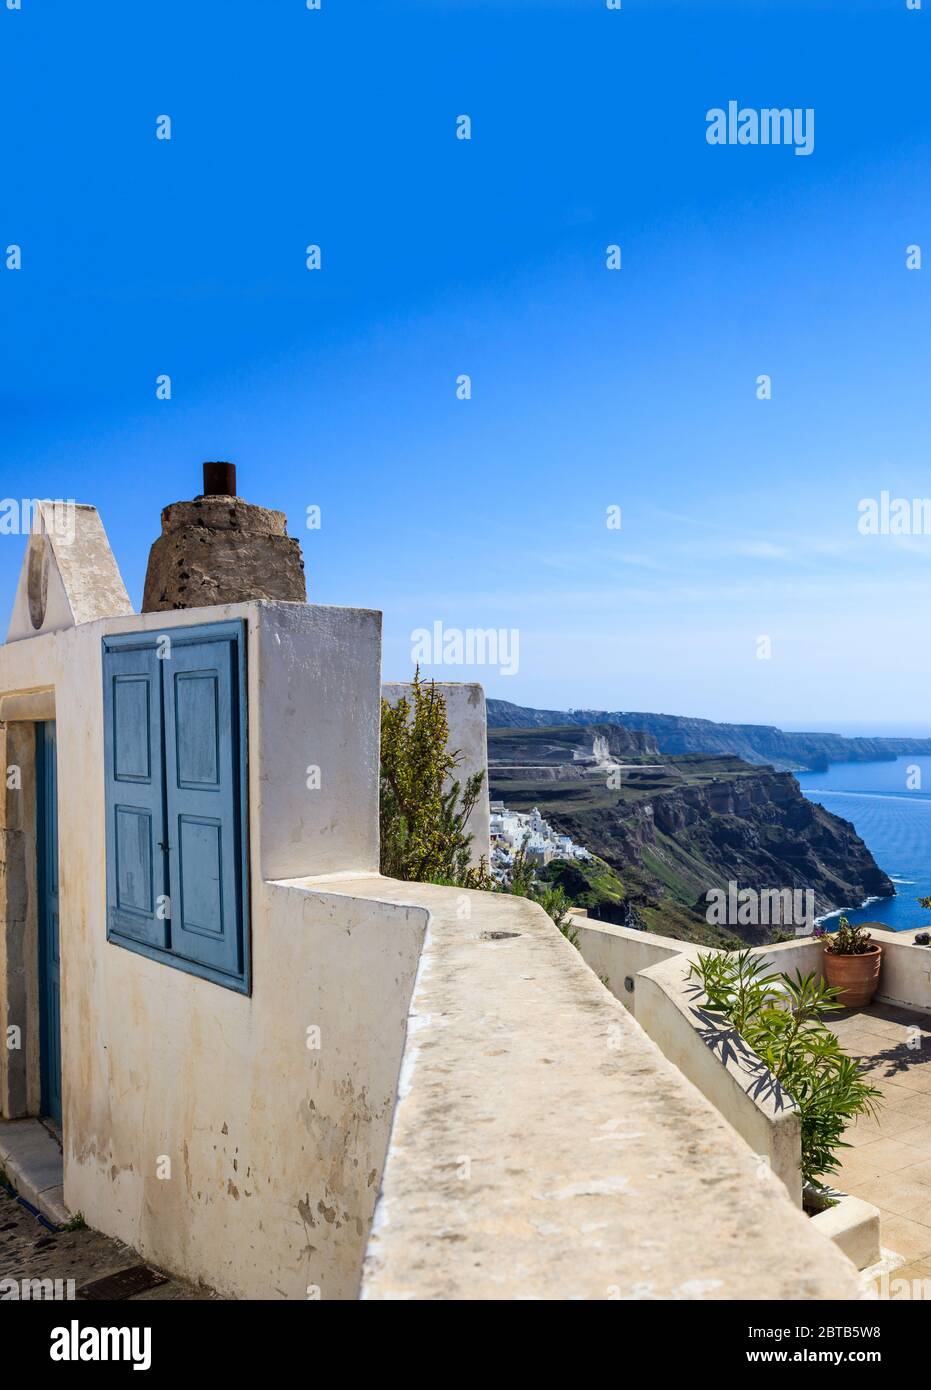 Santorini island, Greece. Traditional architecture, house entrance, terrace and caldera view over Aegean sea, blue clear sky, calm sea Stock Photo